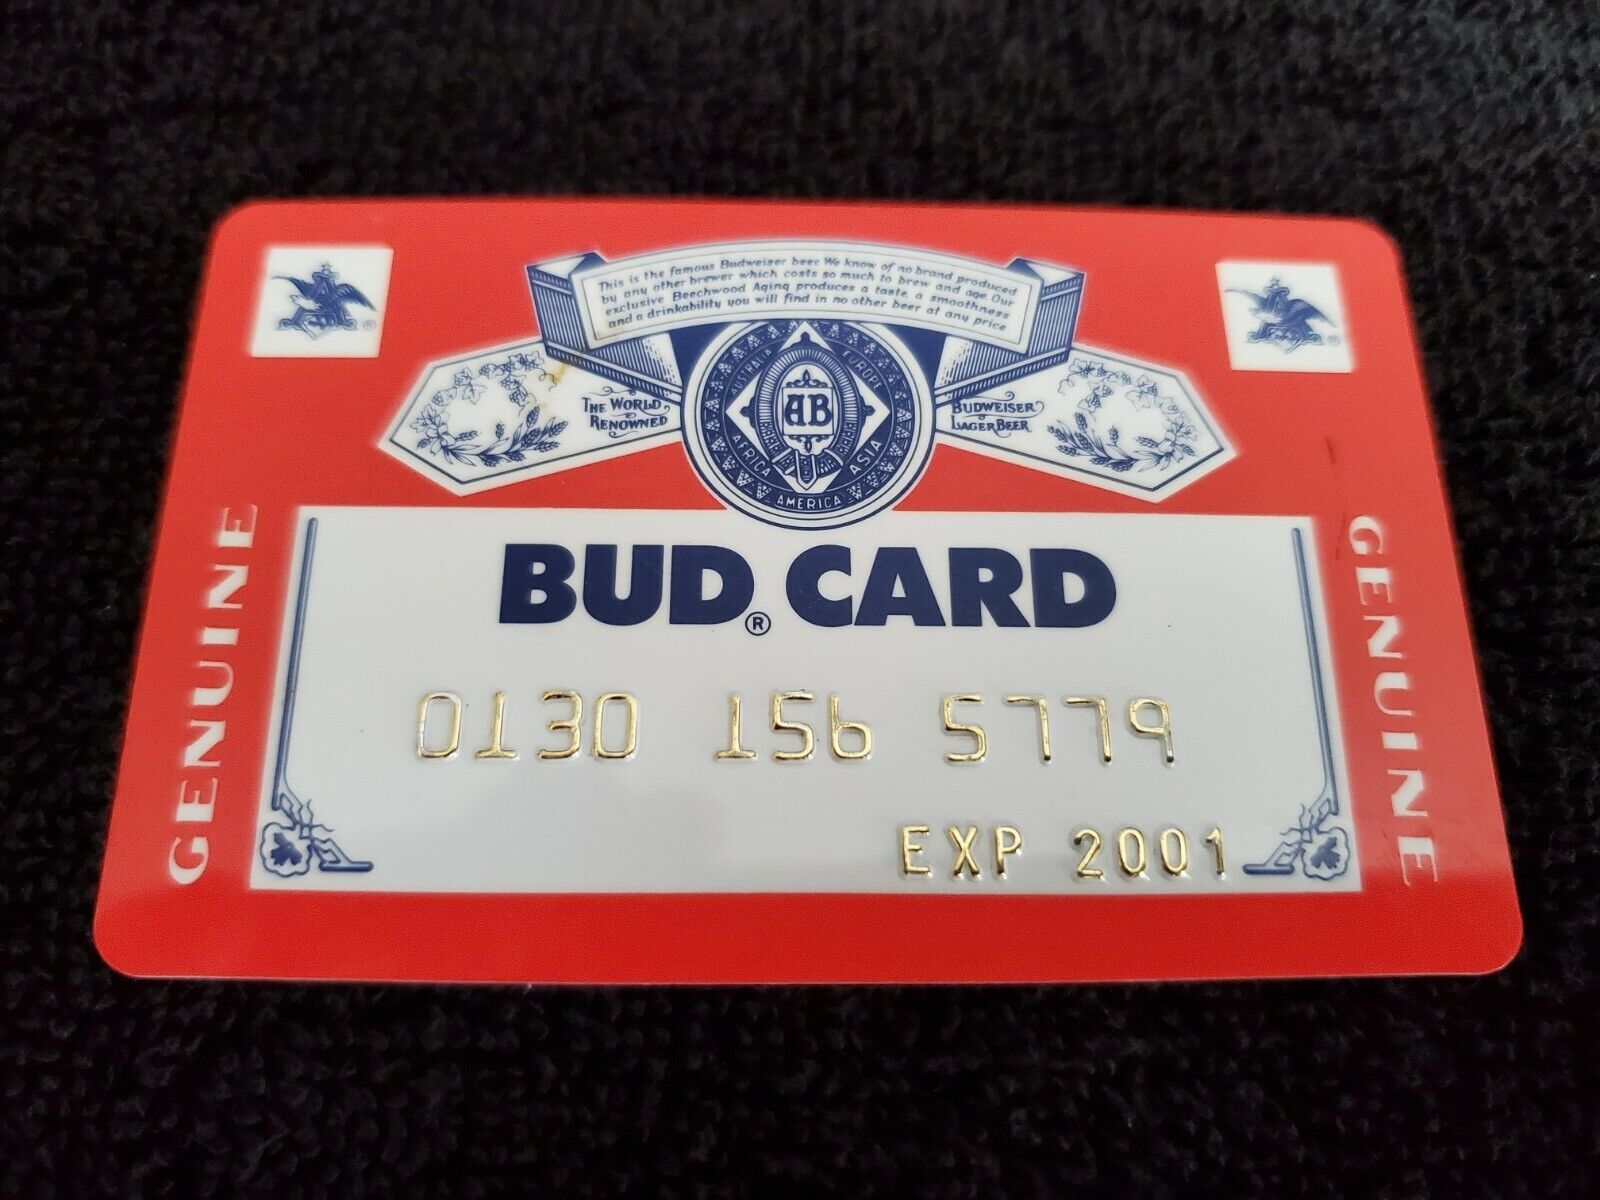 1-Vtg Budweiser Anheuser Busch Bud Card Credit Card..